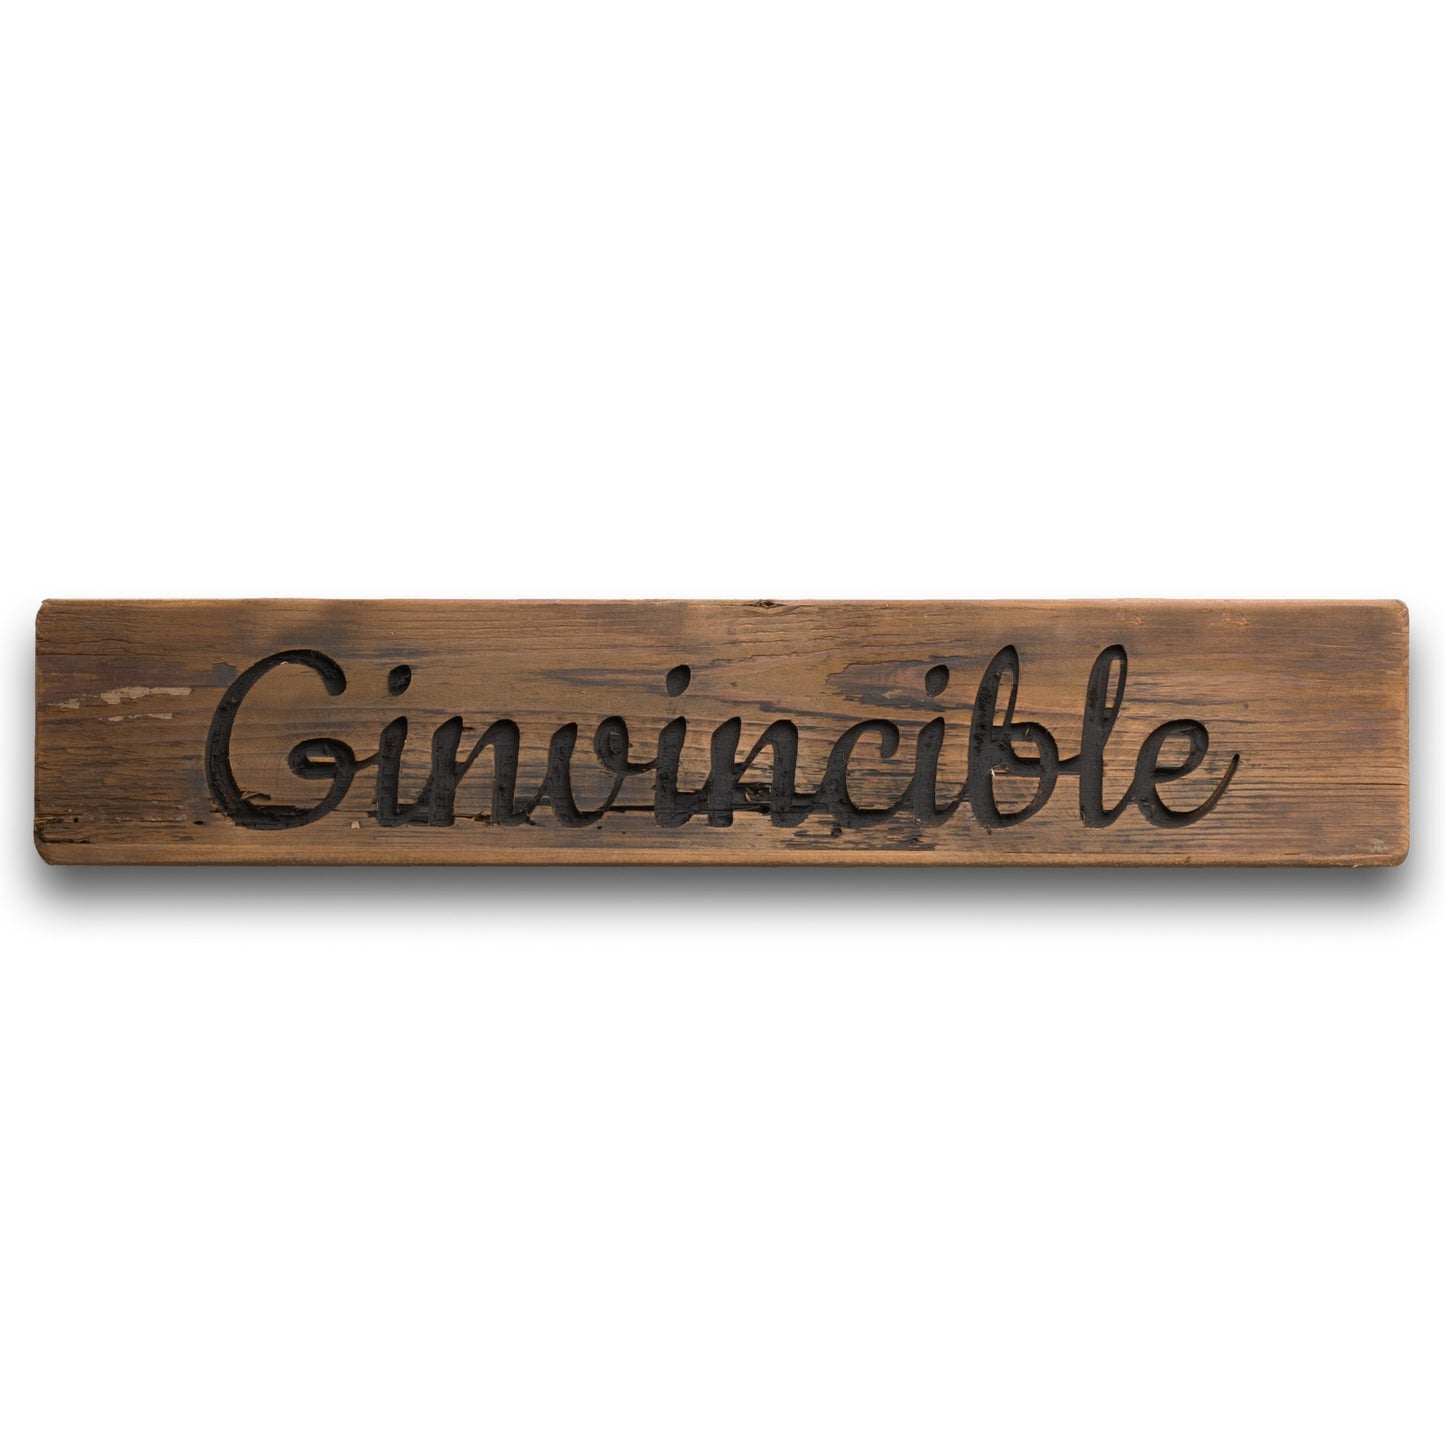 Ginvincible Rustic Wooden Message Plaque